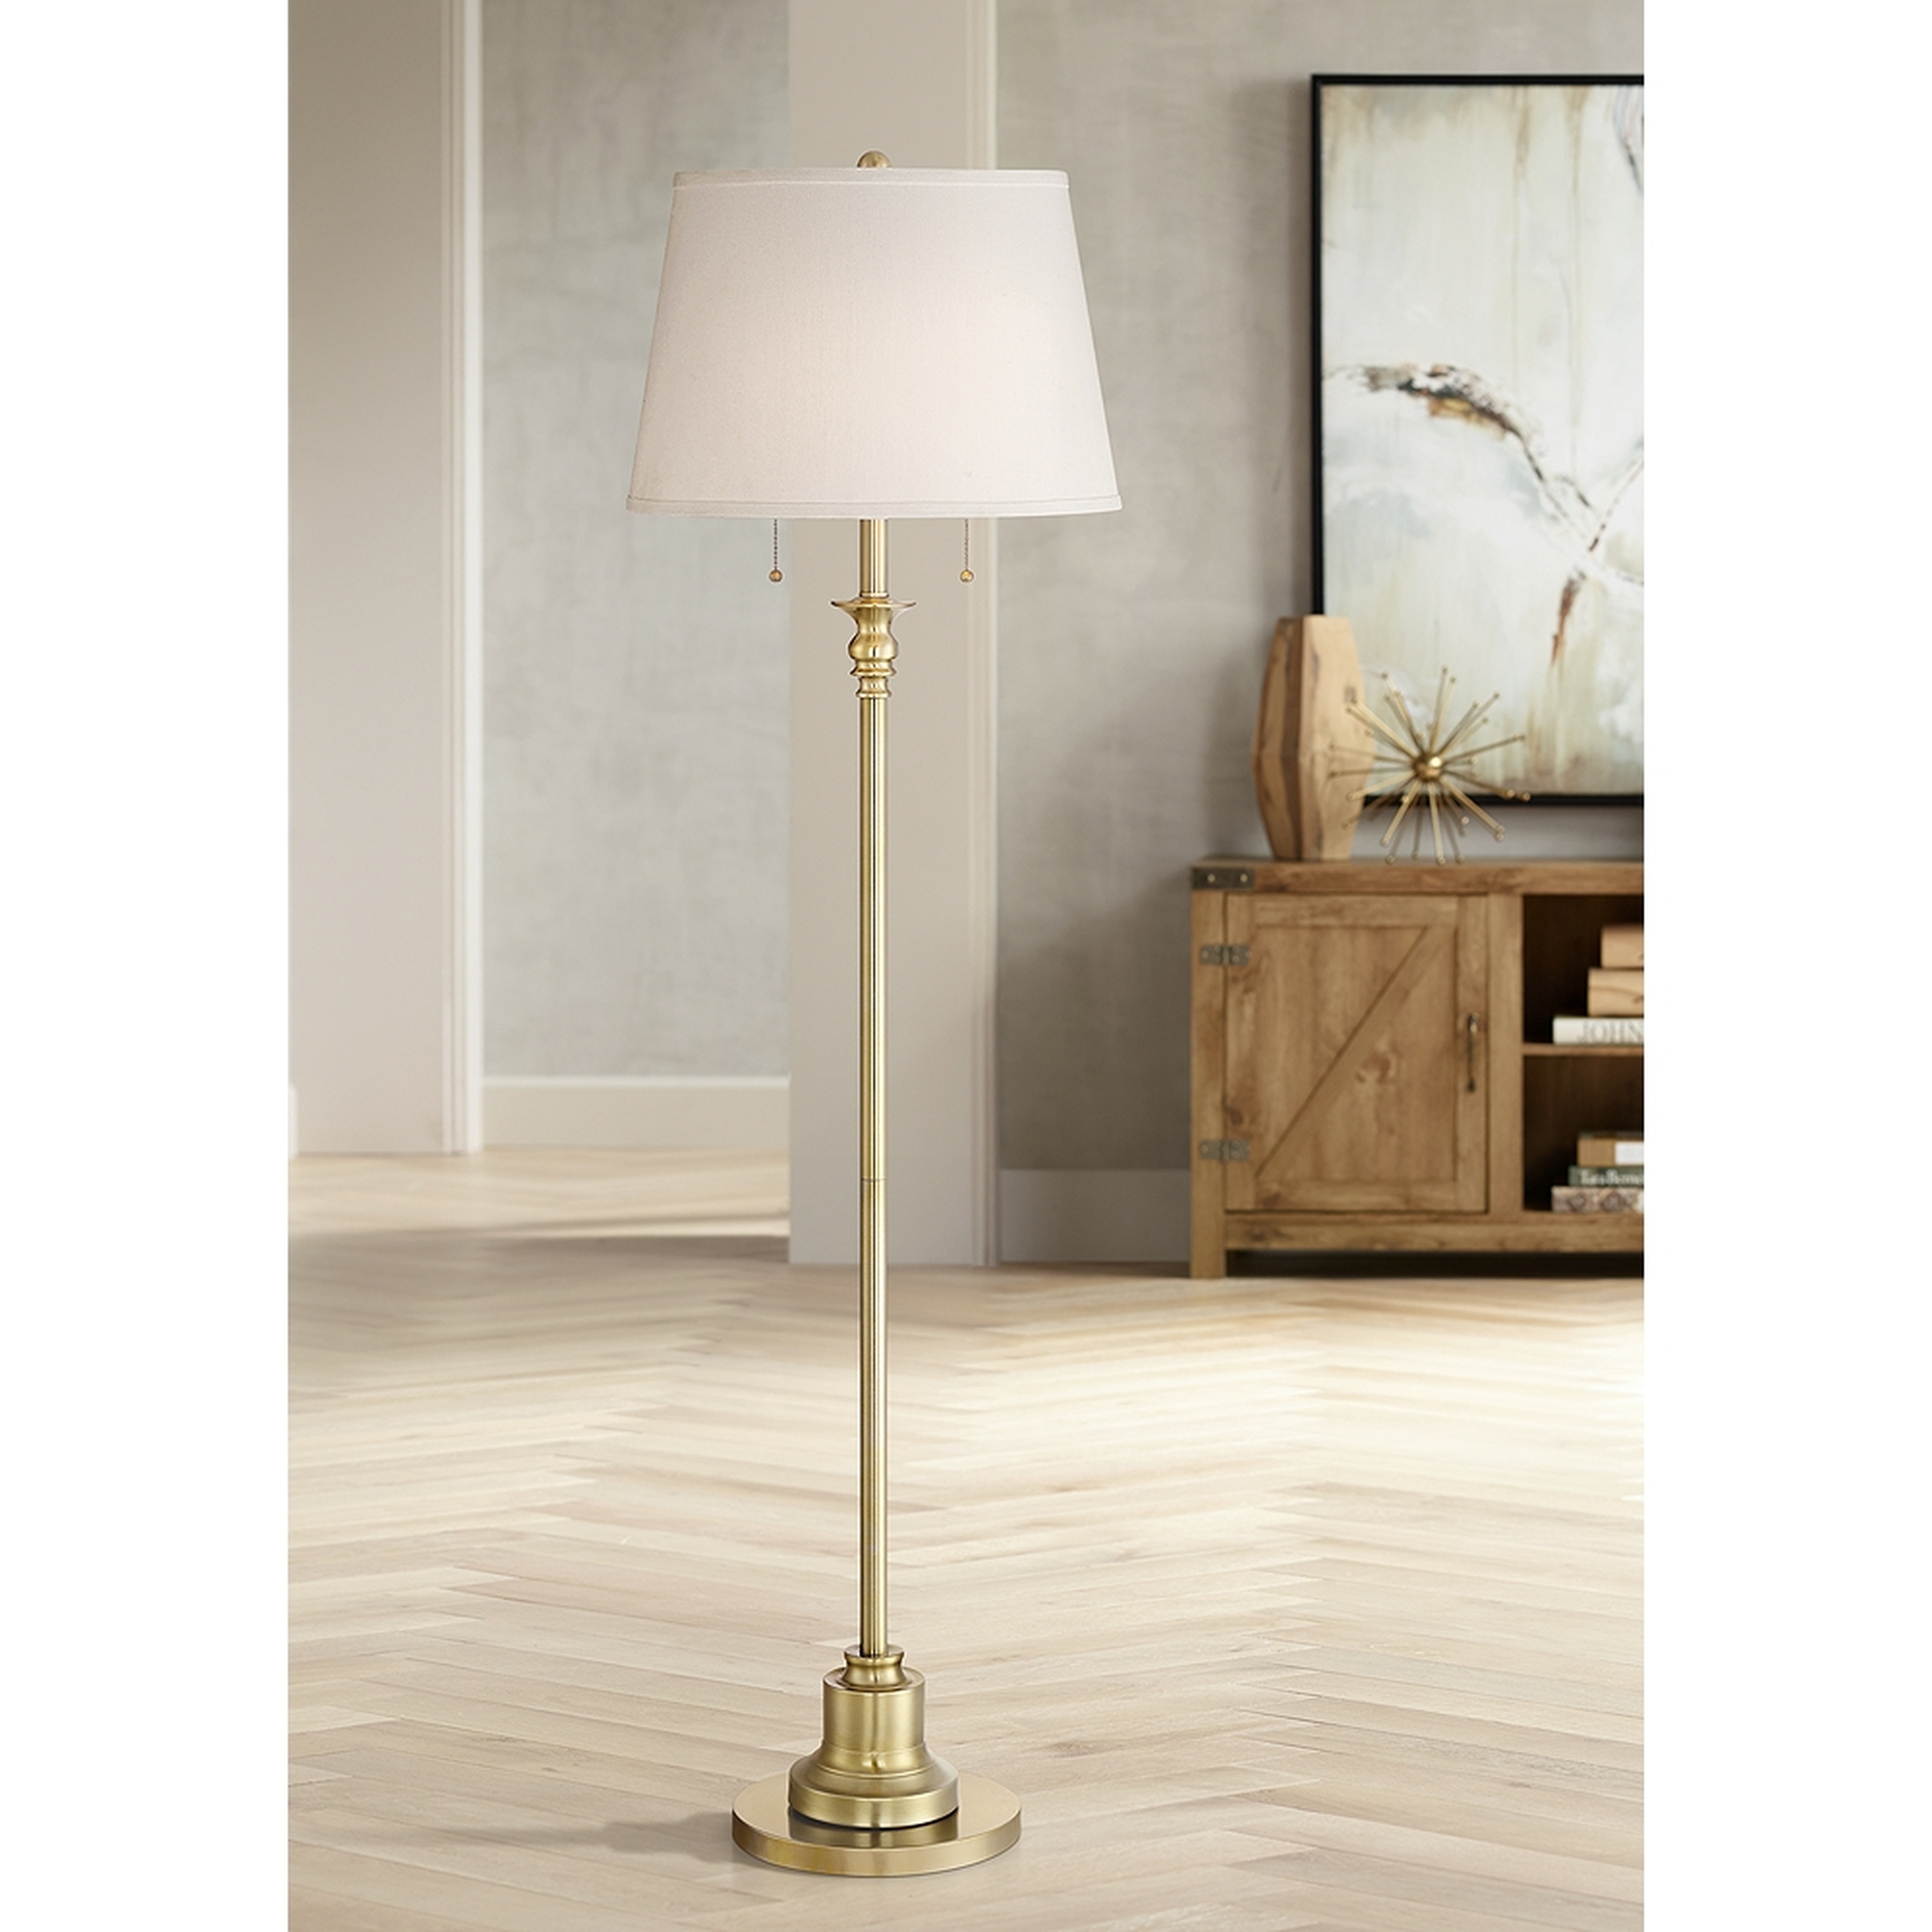 Spenser Brushed Antique Brass Floor Lamp - Style # 35E33 - Lamps Plus